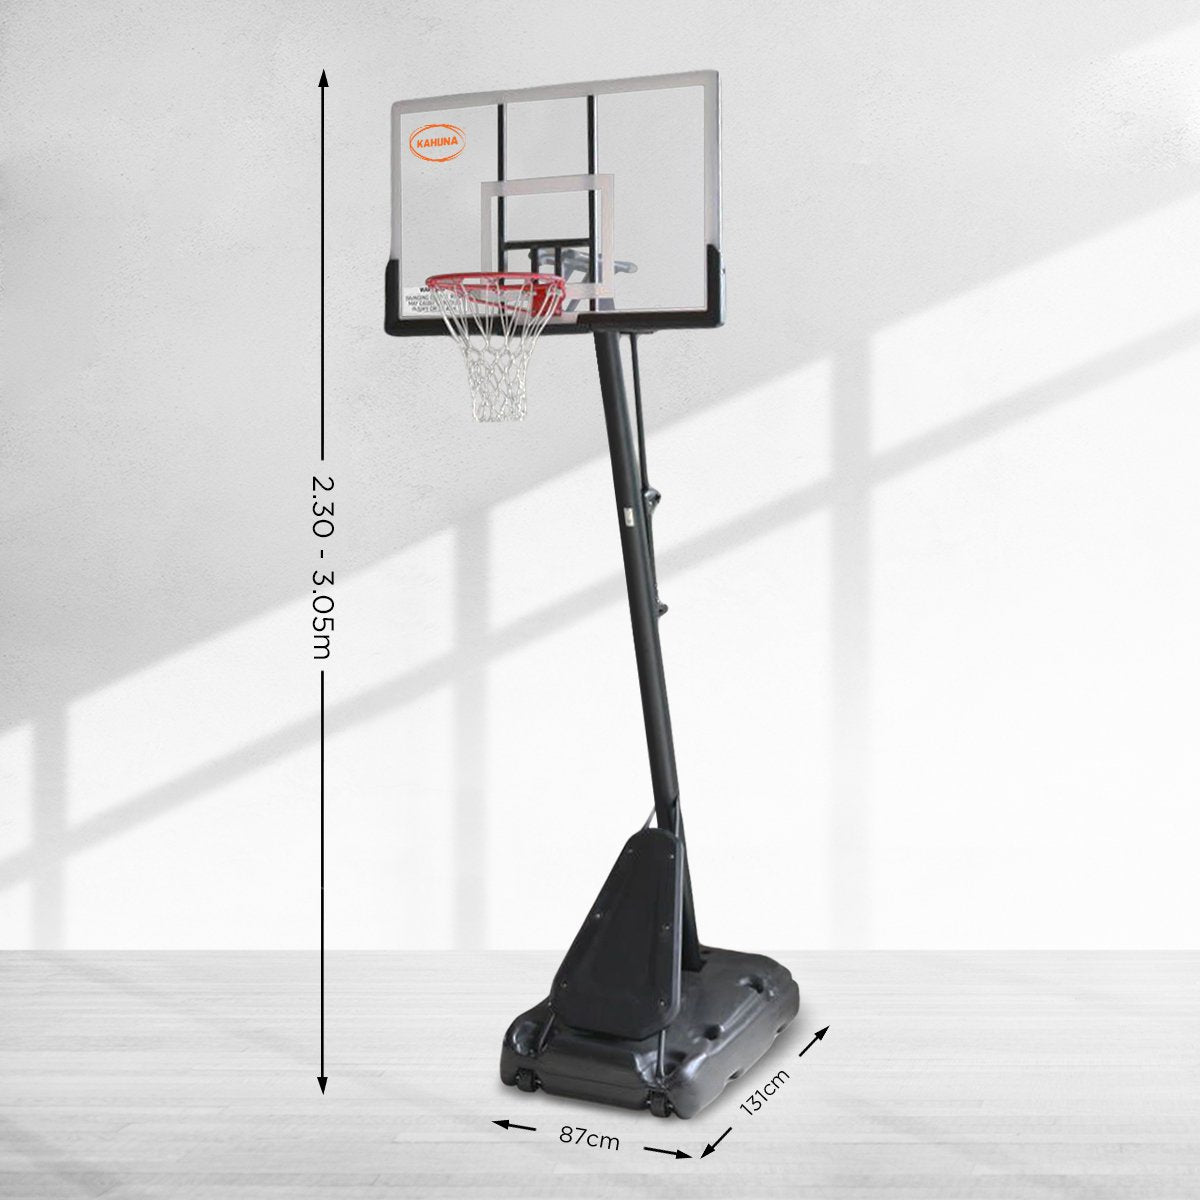 Kahuna Portable Basketball Hoop System 2.3 to 3.05m for Kids & Adults - SILBERSHELL